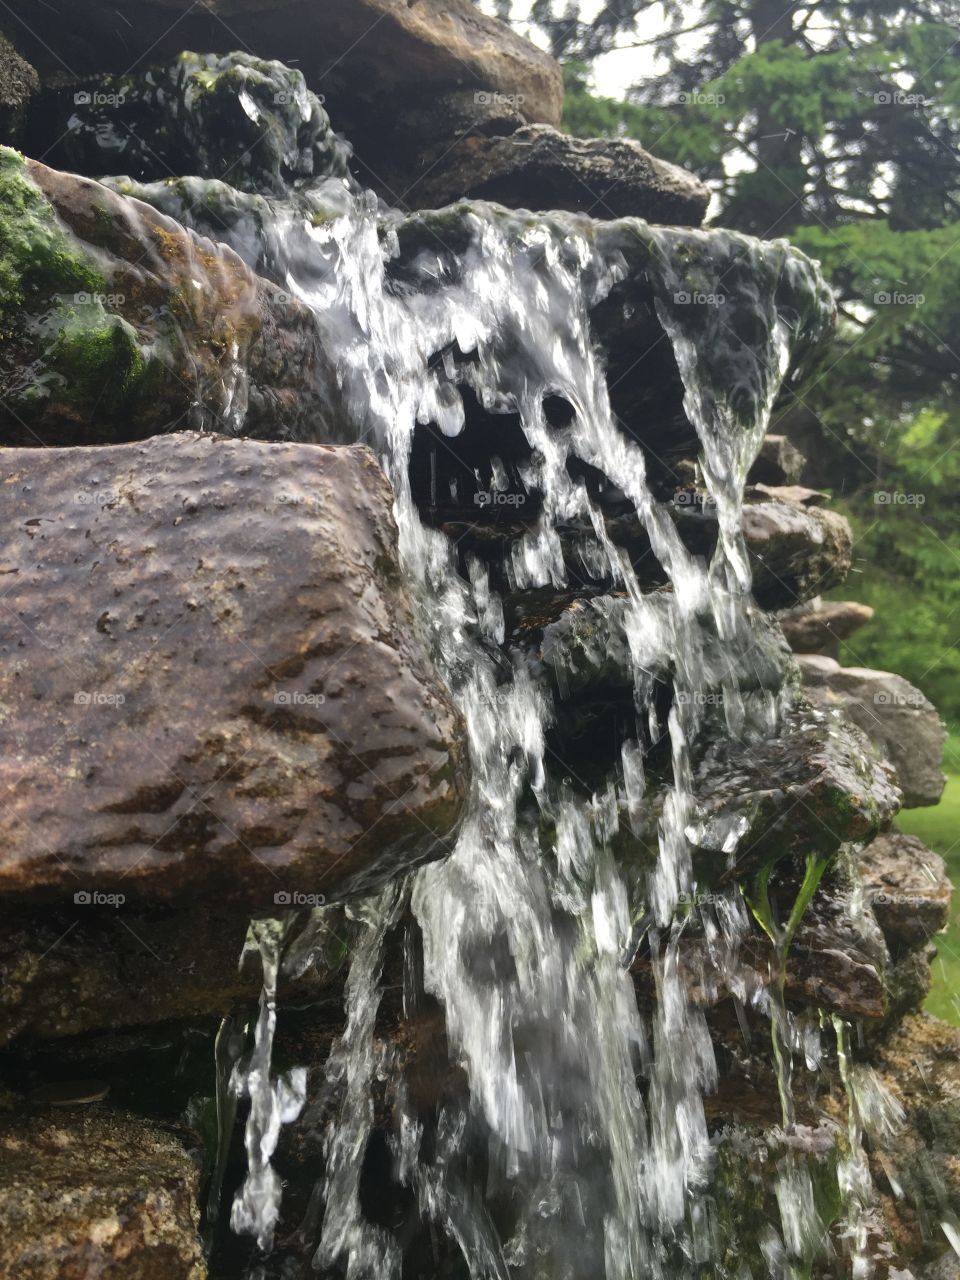 Miniature waterfall. Artisan well water running over rocks